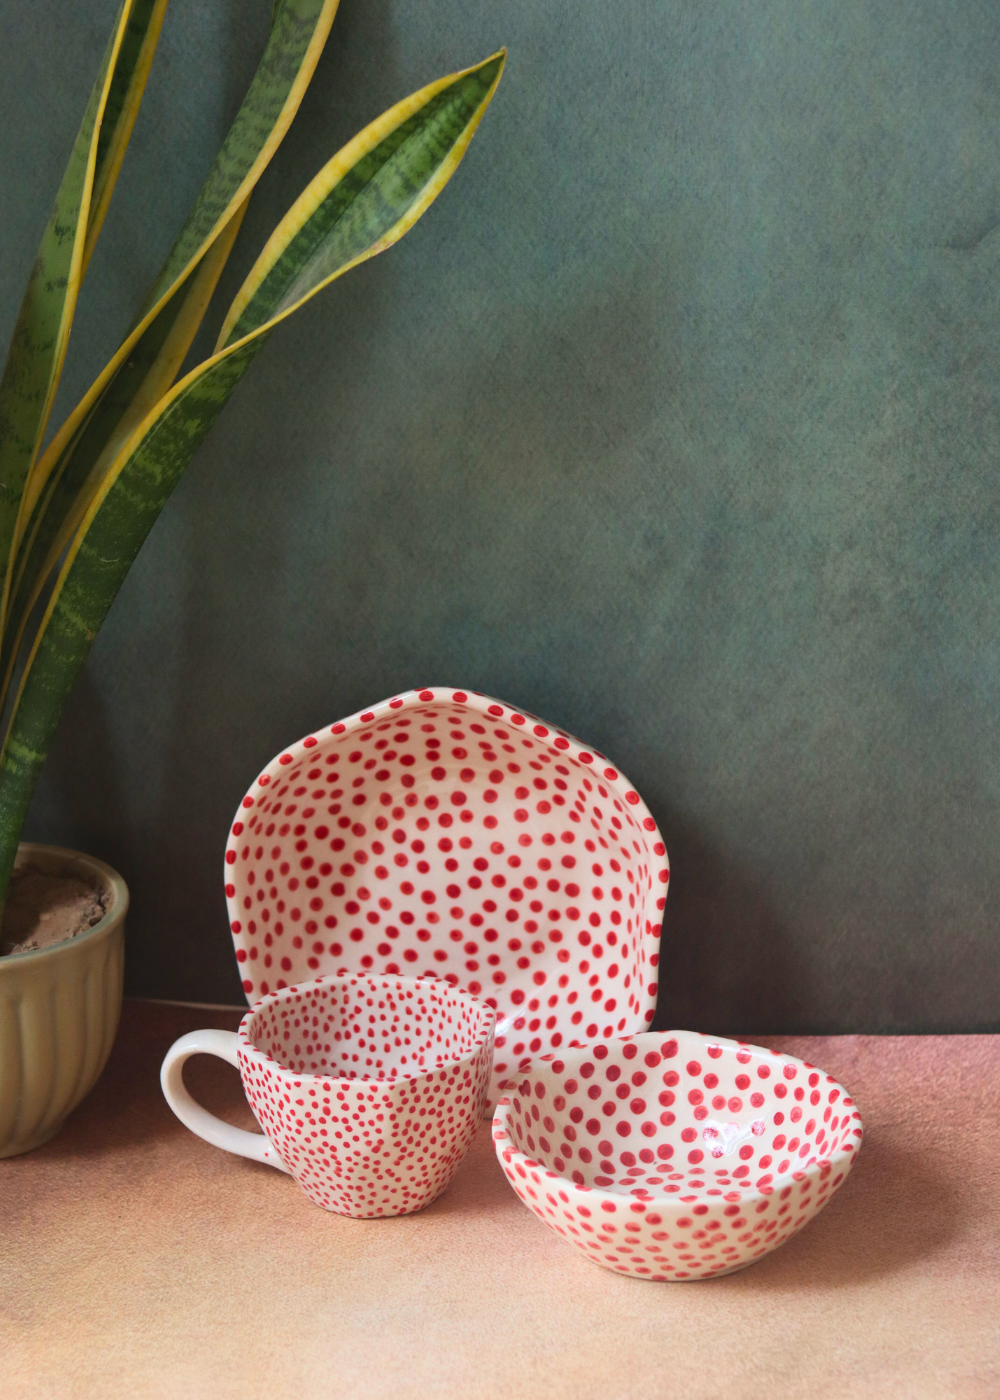 Handmade ceramic red & white bowls & coffee mug